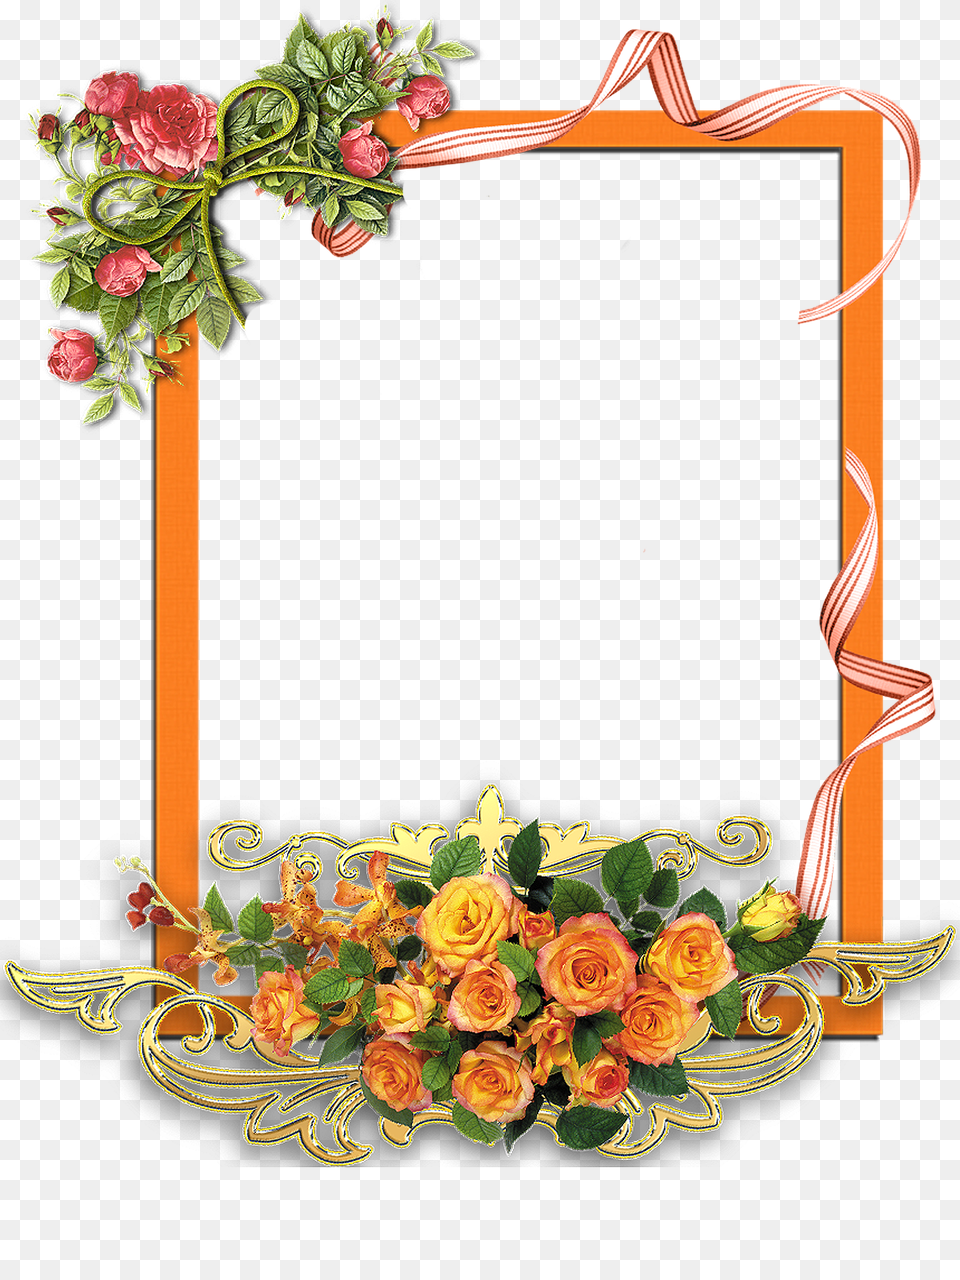 Nothing But Frames Frame Flower, Graphics, Plant, Flower Bouquet, Flower Arrangement Png Image